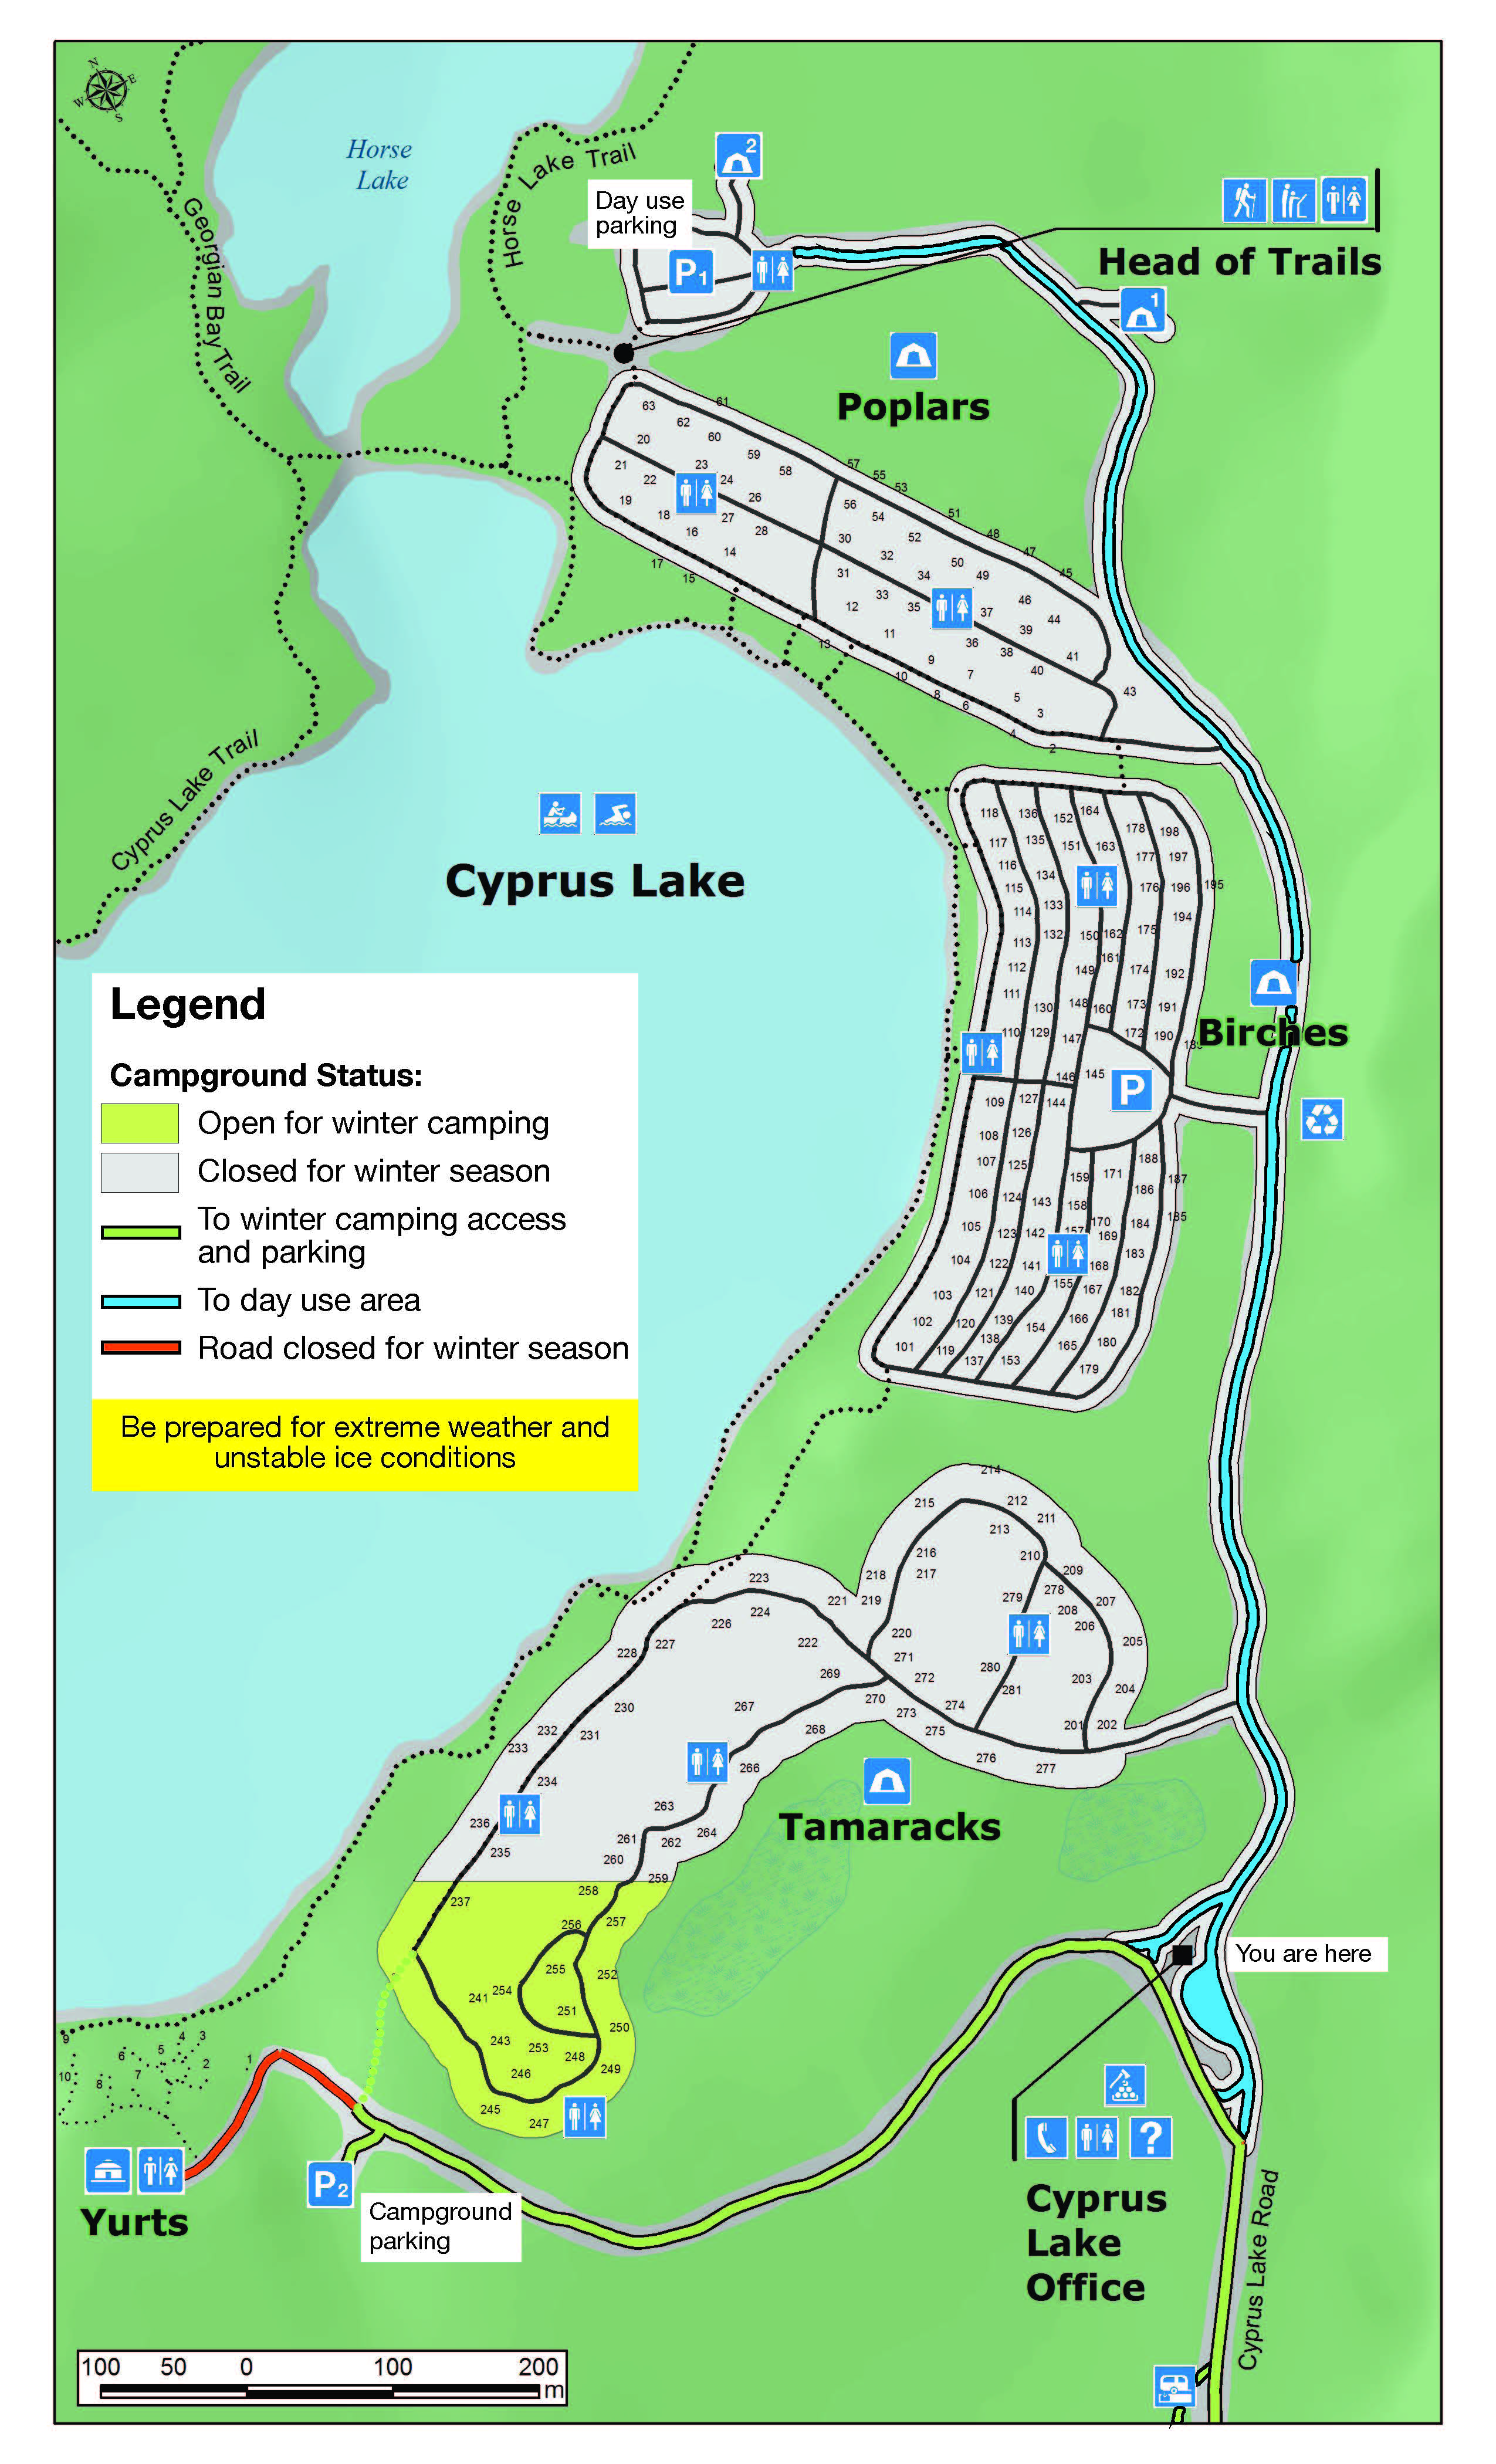 Map of Cyprus Lake